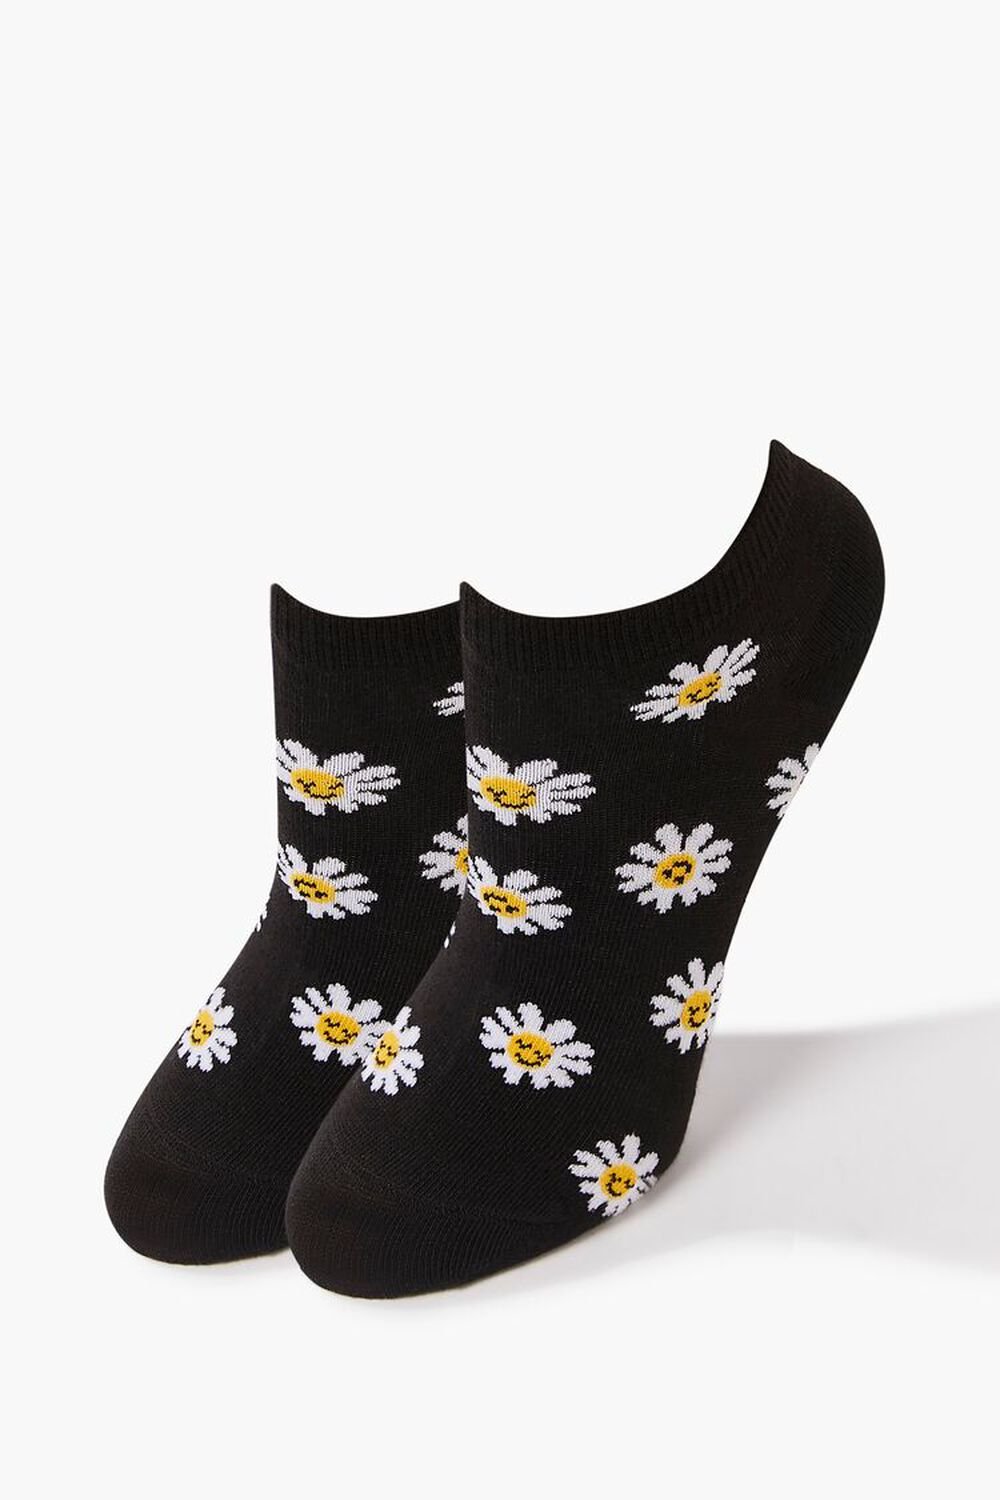 BLACK/MULTI Happy Face Floral Ankle Socks, image 1